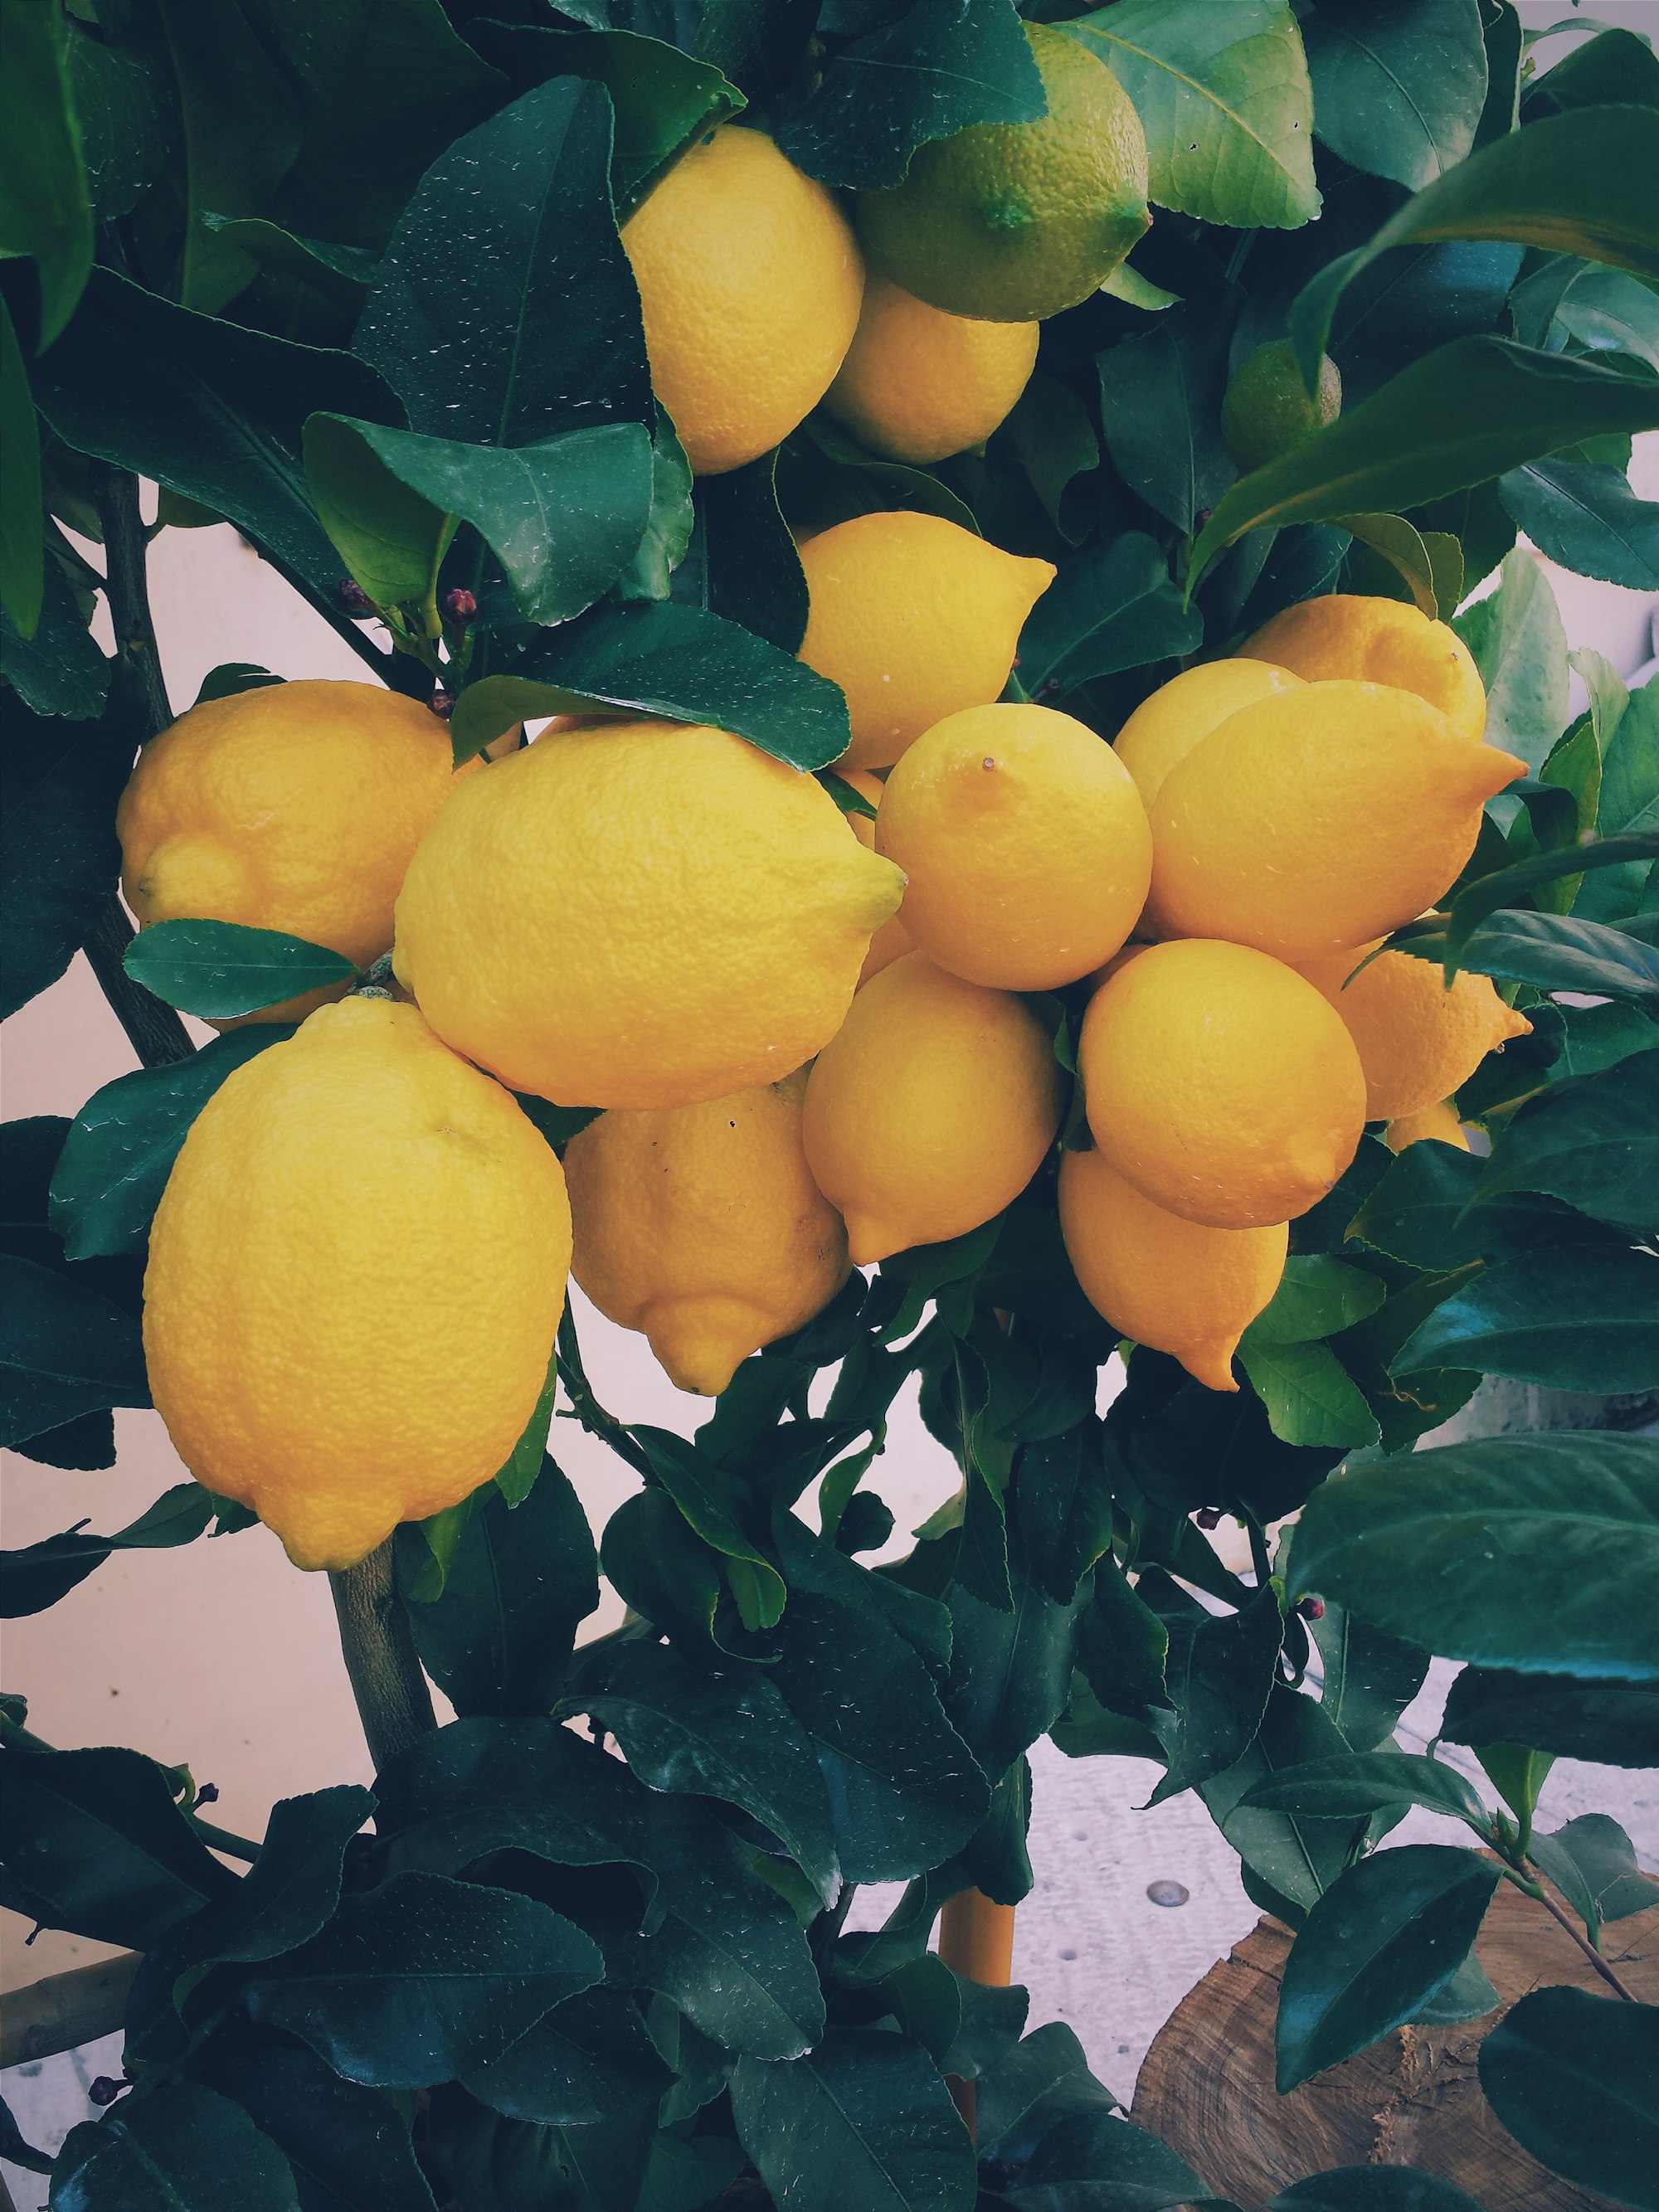 Just a yellow lemon tree